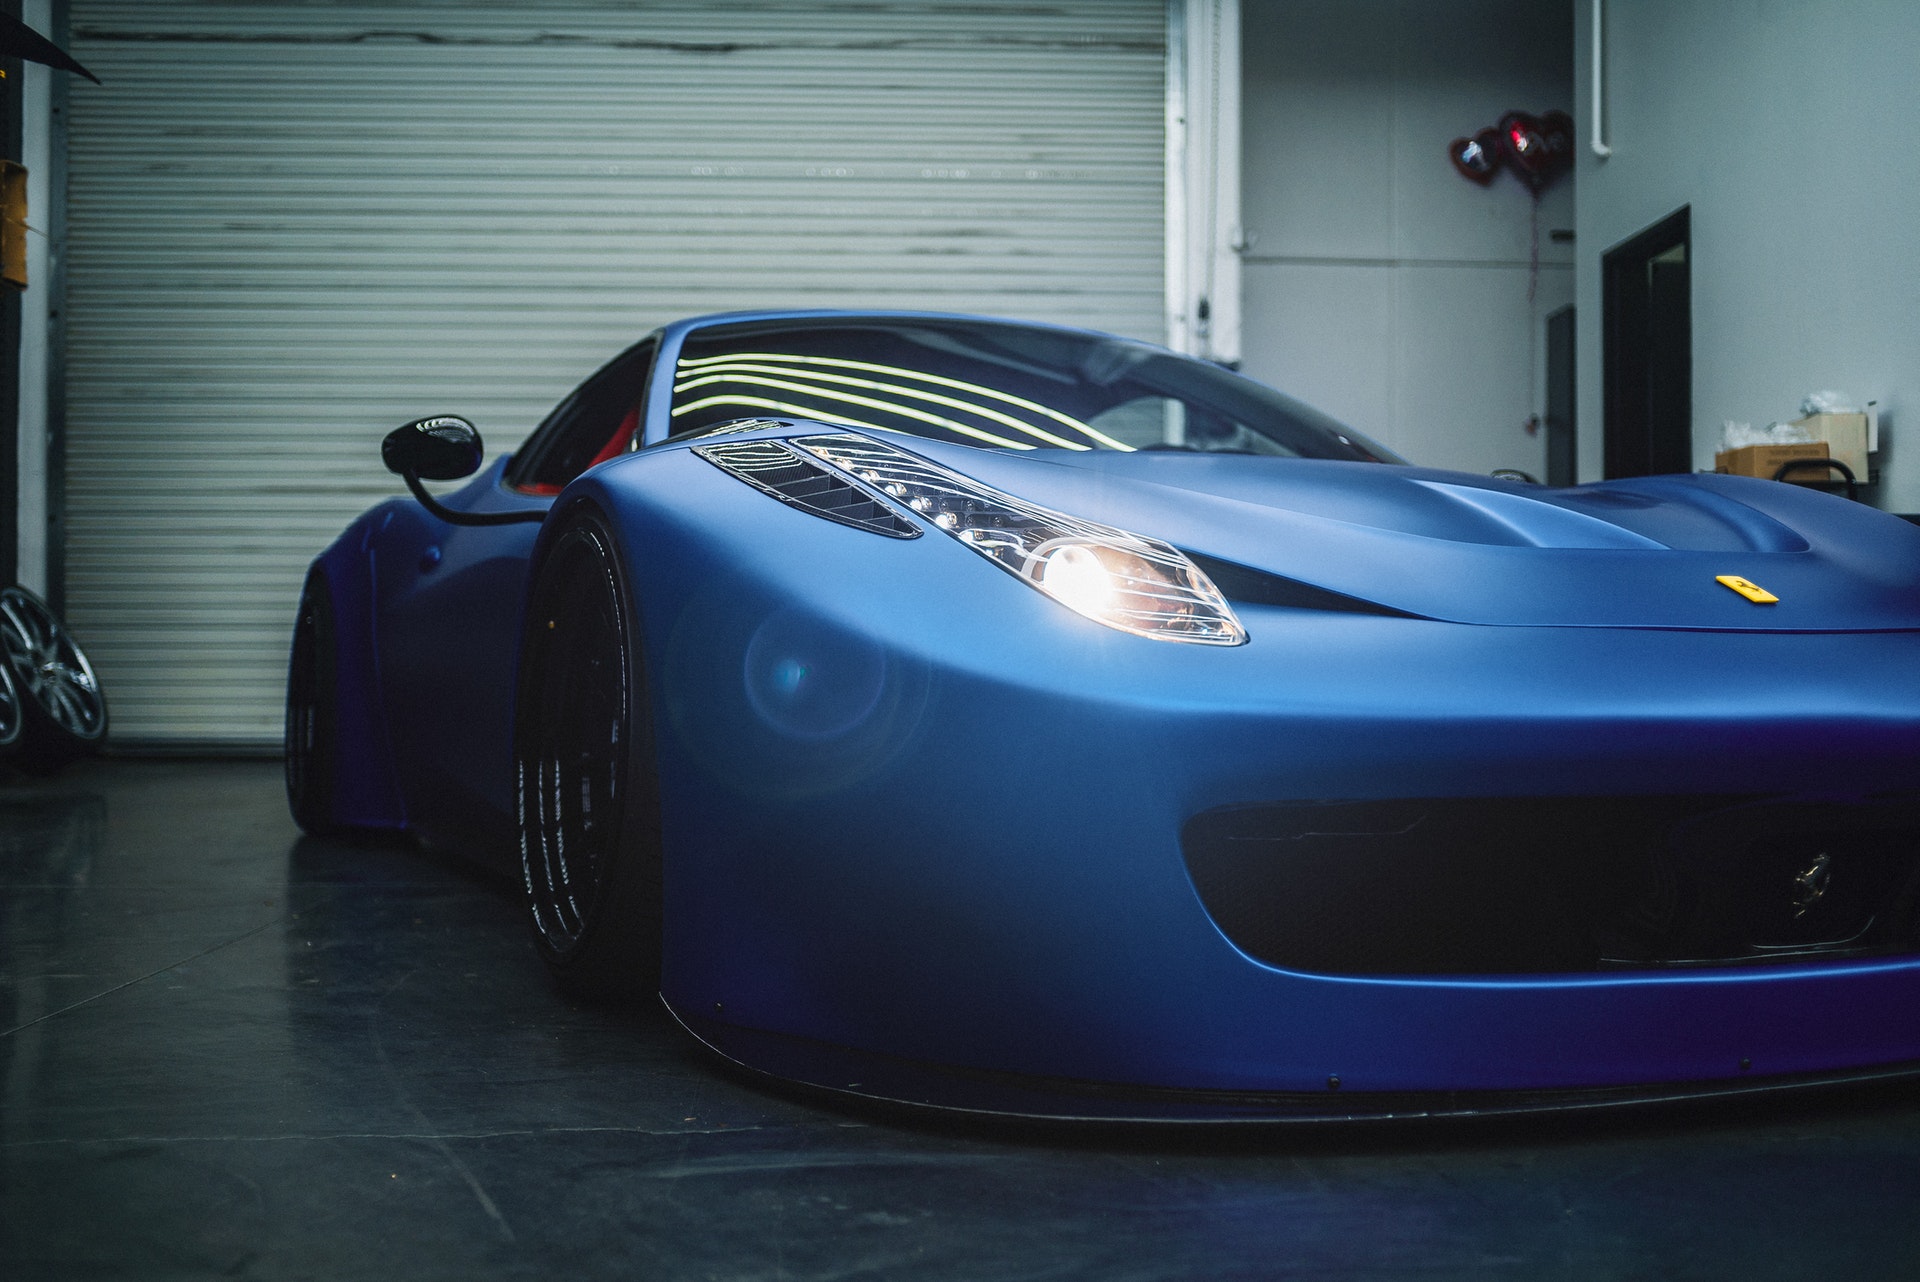 blue sports car in a garage